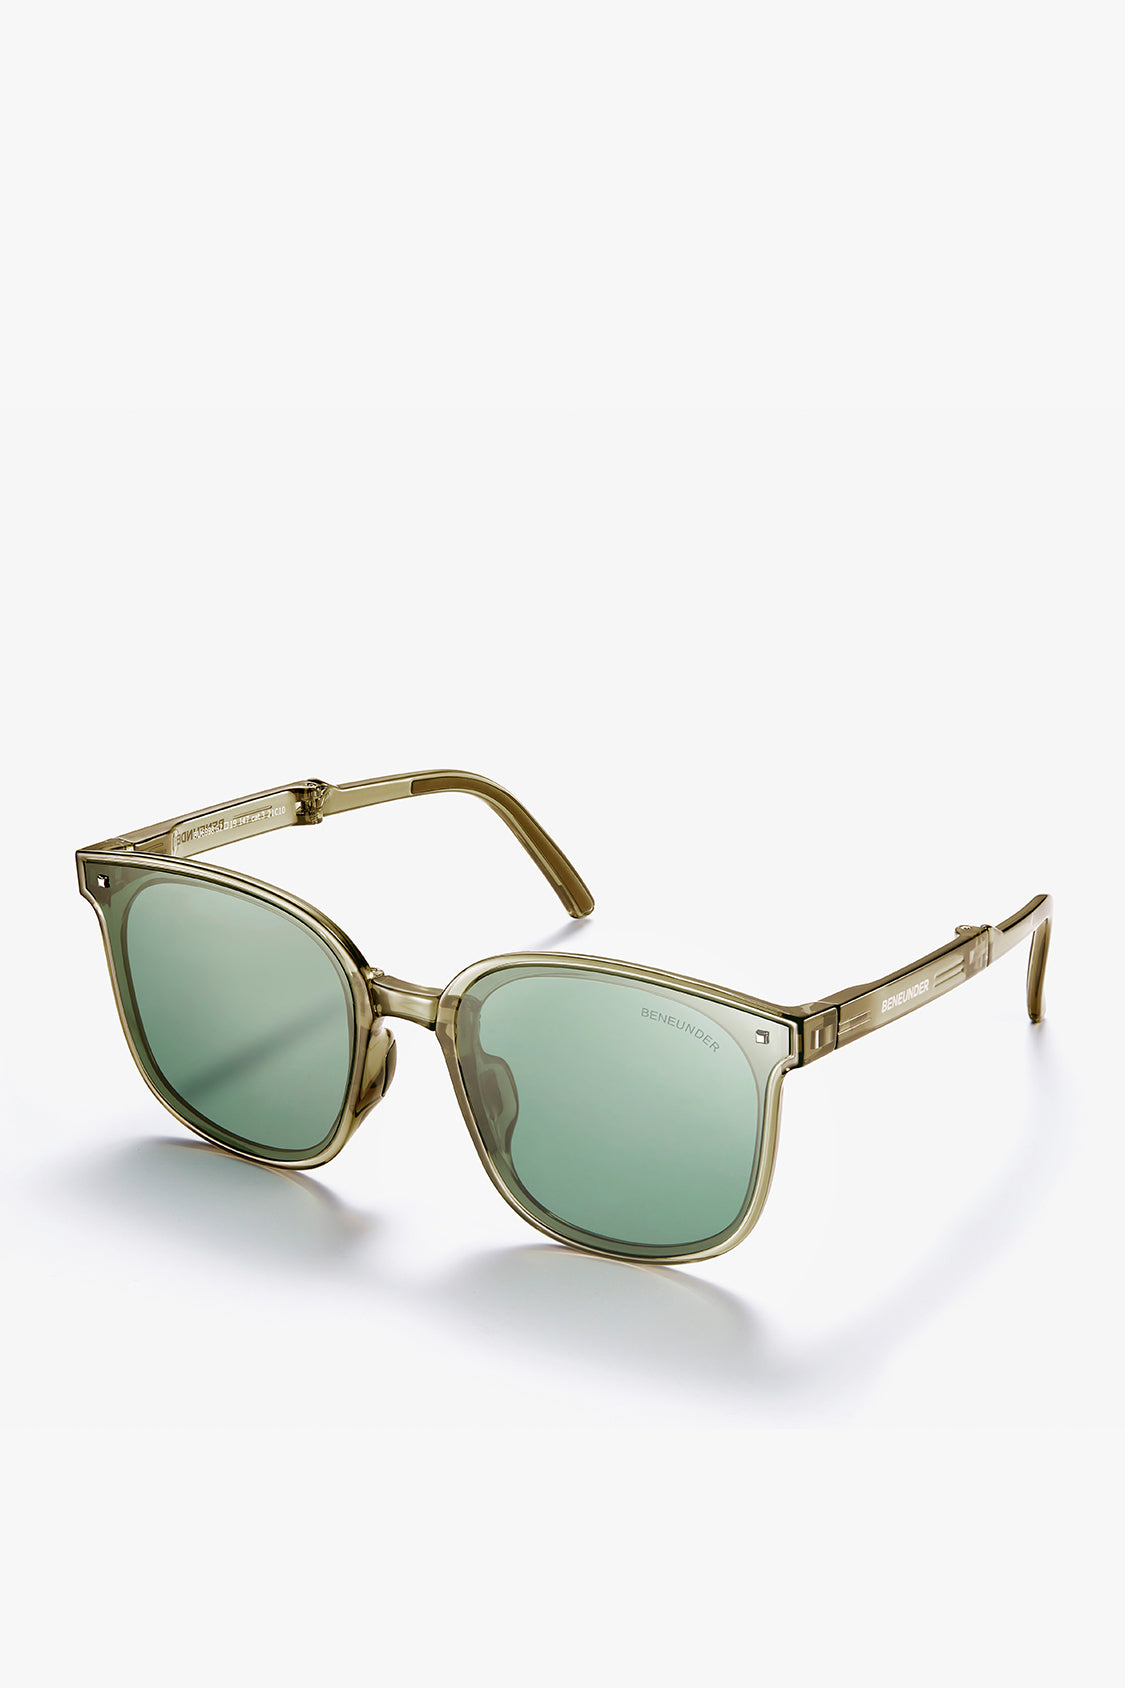 beneunder wild polarized folding sunglasses shades for women men #color_green